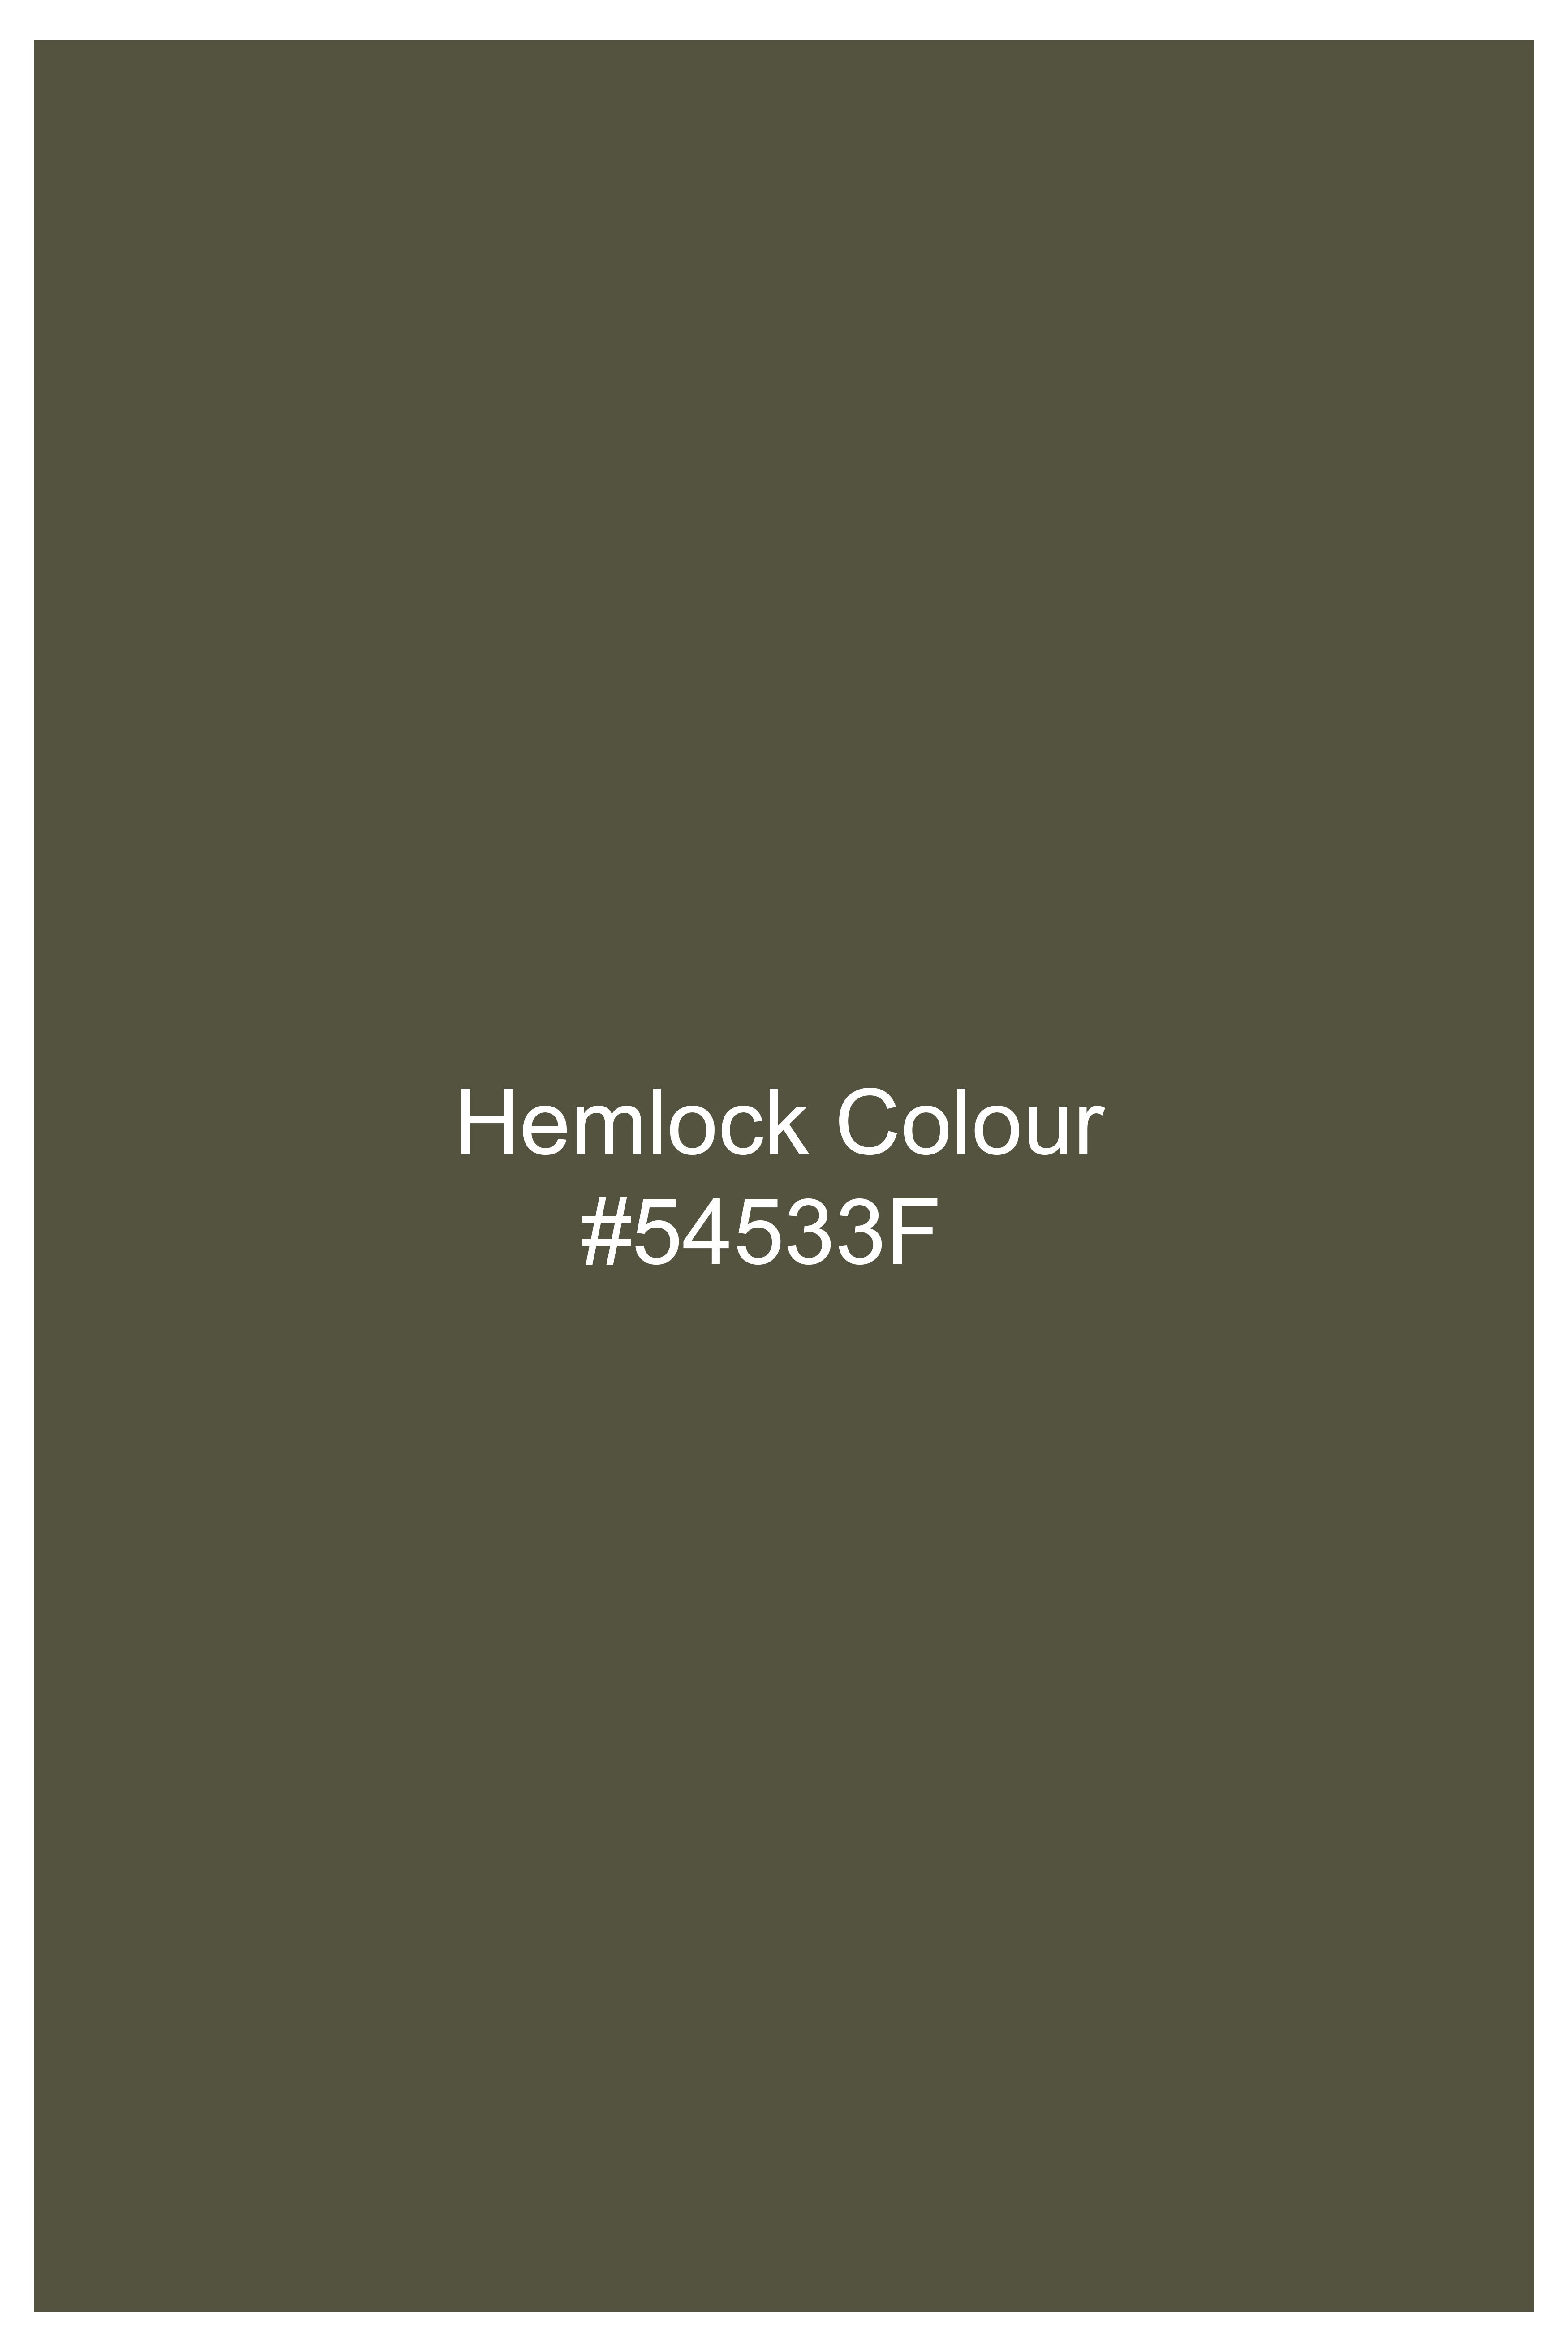 Hemlock Green Premium Cotton Bandhgala Stretchable Traveler Suit ST2786-BG-36,ST2786-BG-38,ST2786-BG-40,ST2786-BG-42,ST2786-BG-44,ST2786-BG-46,ST2786-BG-48,ST2786-BG-50,ST2786-BG-52,ST2786-BG-54,ST2786-BG-56,ST2786-BG-58,ST2786-BG-60